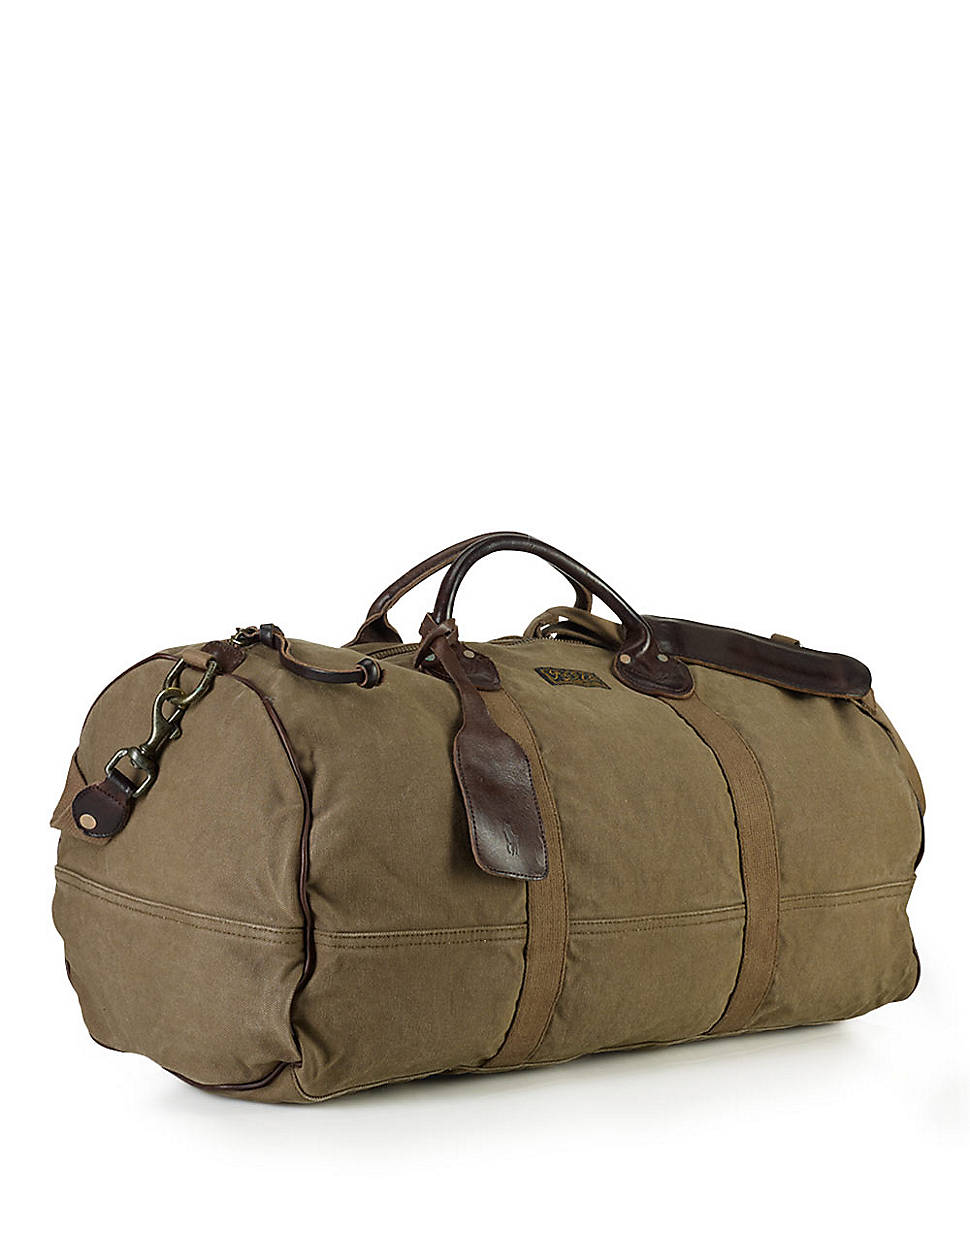 Lyst - Polo ralph lauren Canvas Bedford Duffel Bag in Brown for Men